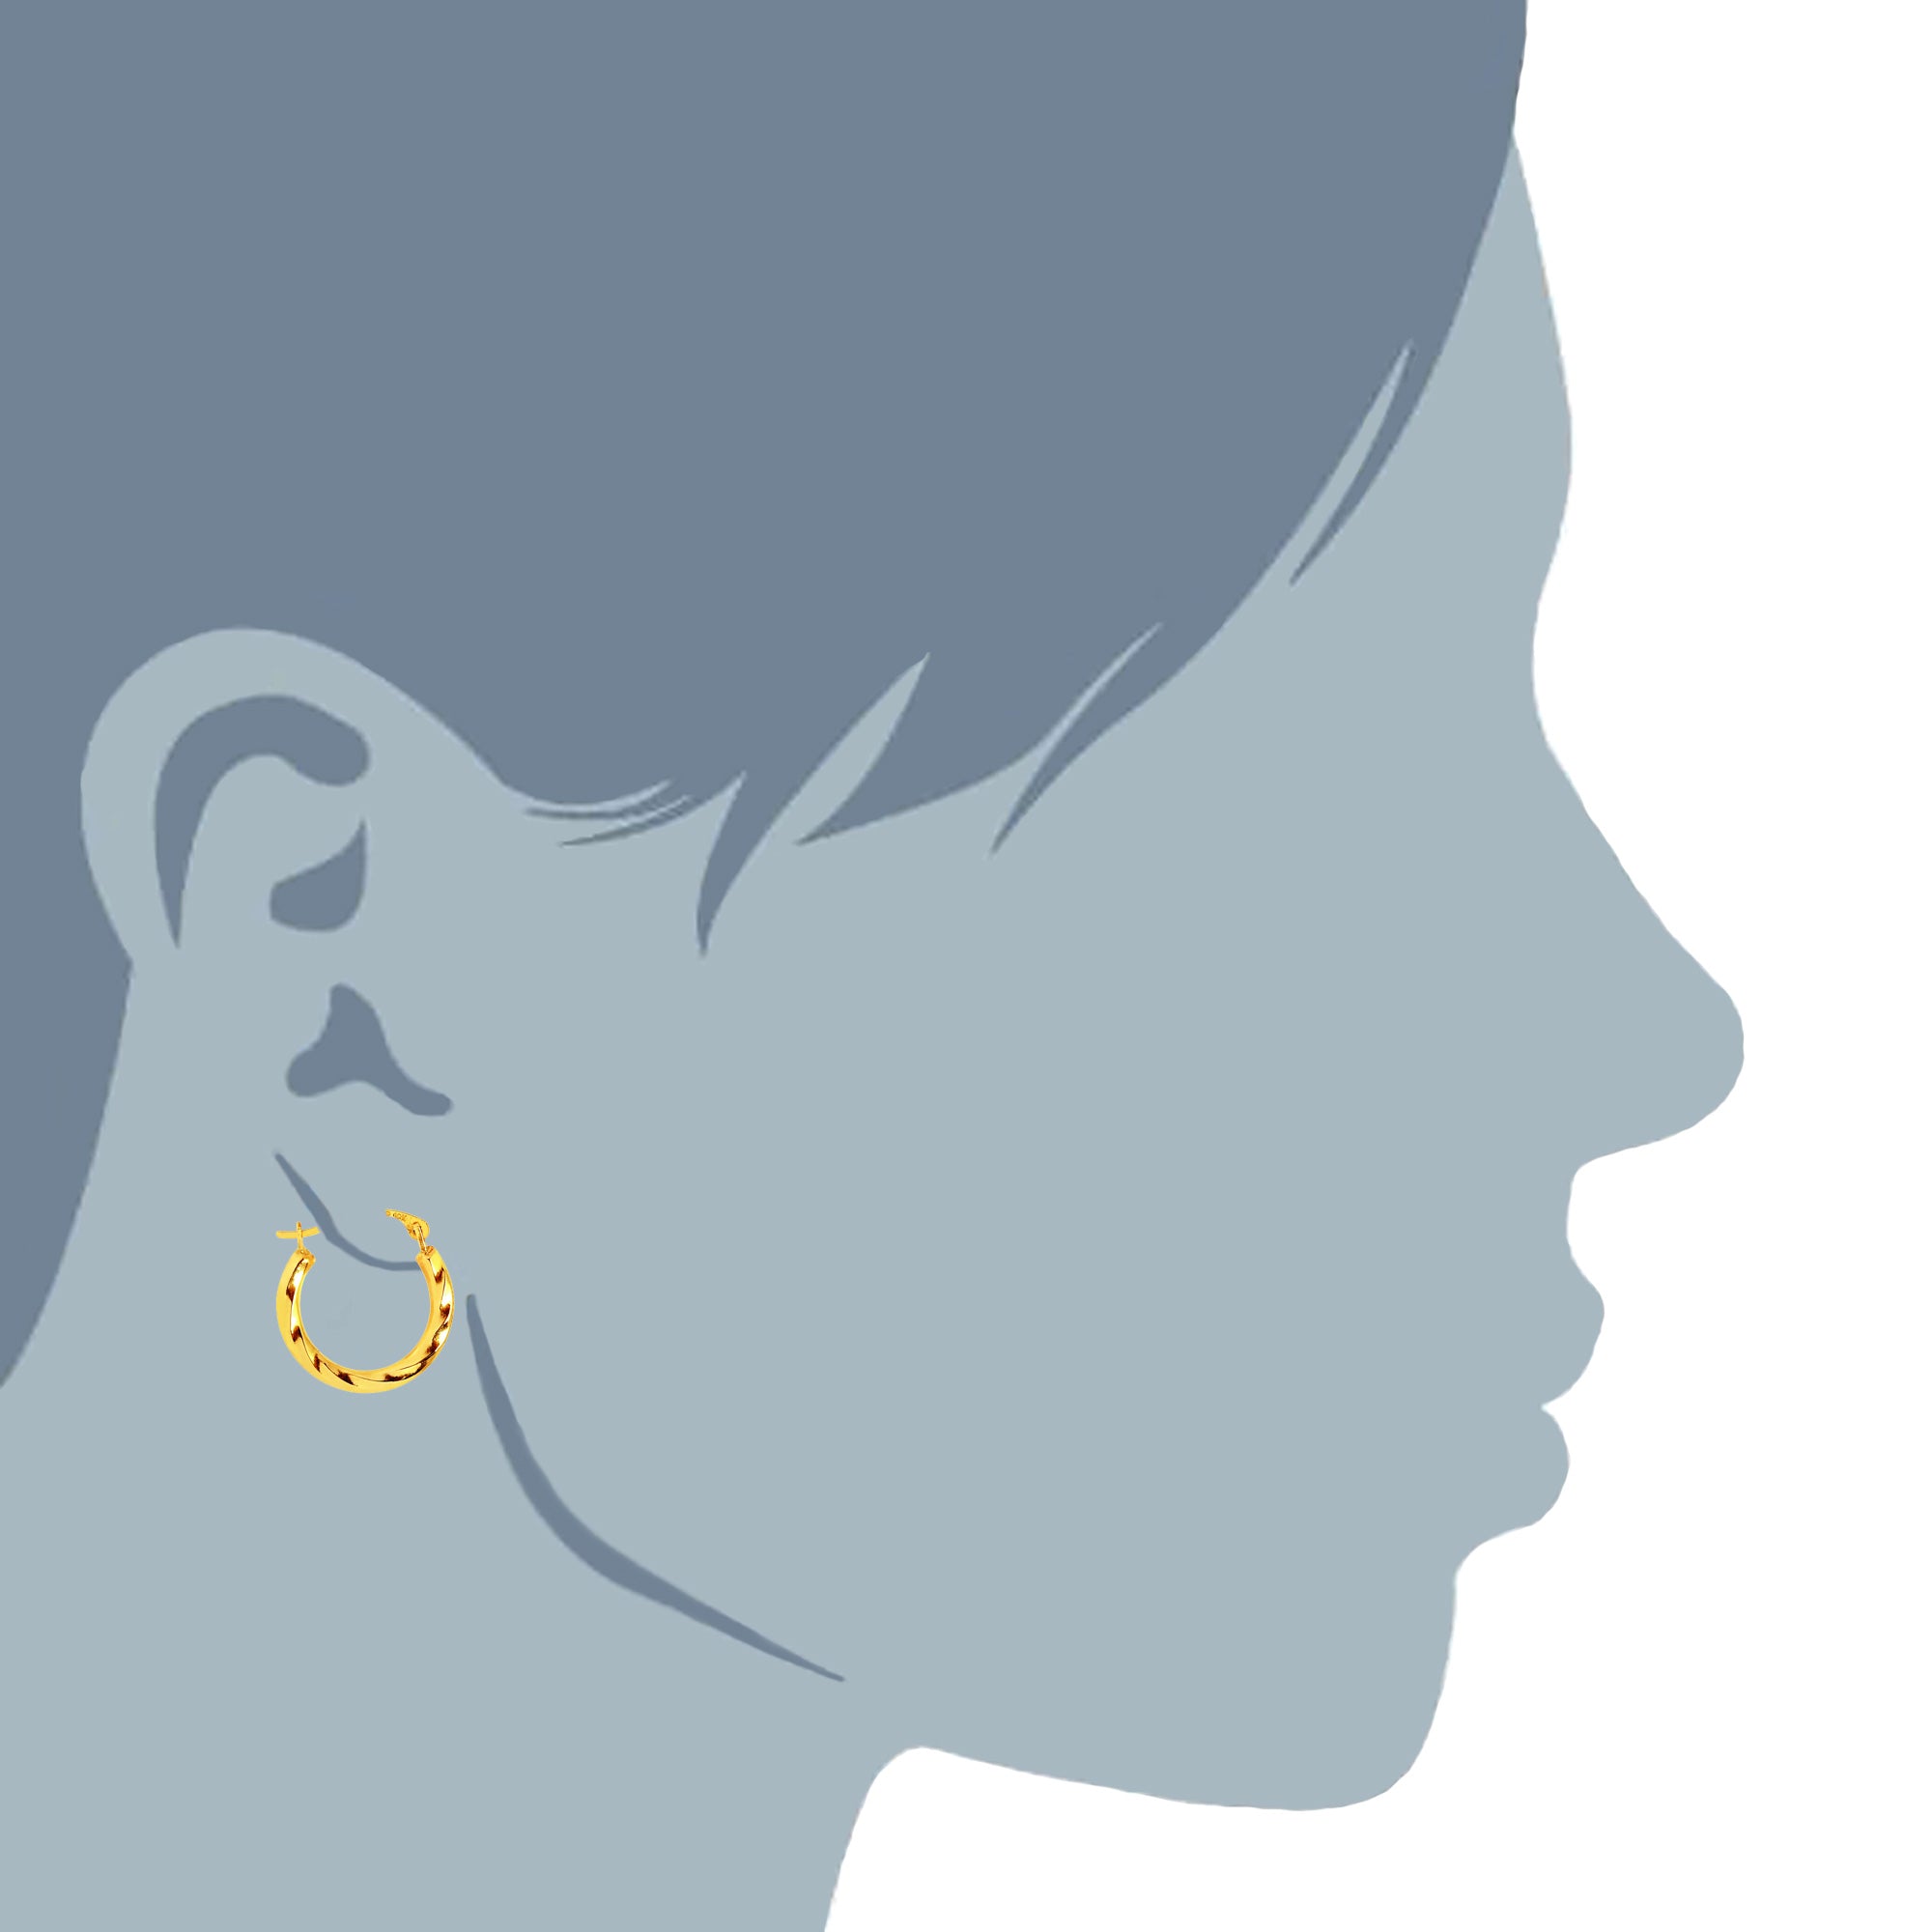 10k Yellow Gold Twisted Hoop Earrings, Diameter 15mm fine designer jewelry for men and women